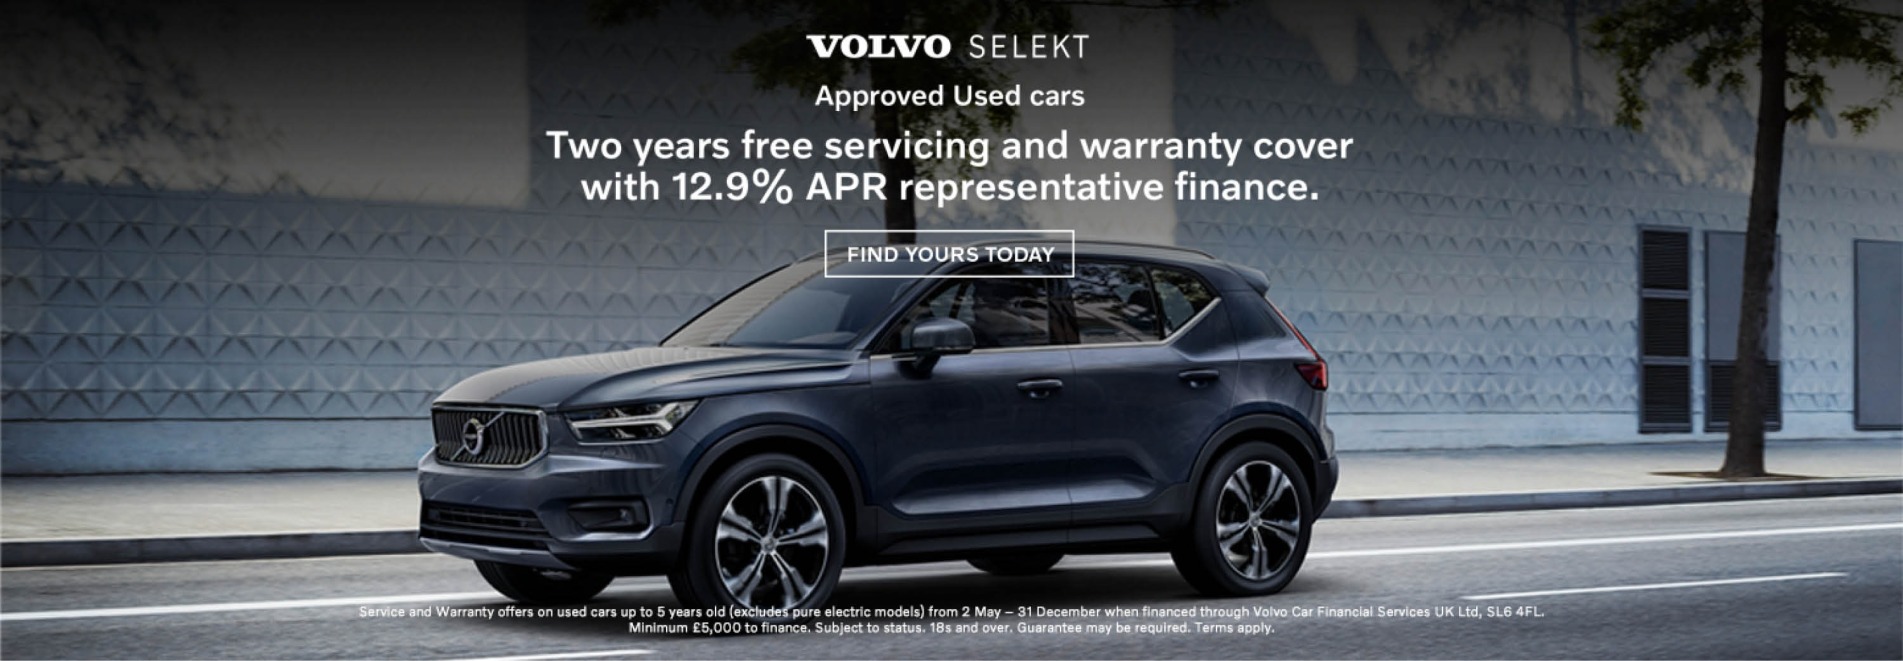 Volvo Selekt homepage banner